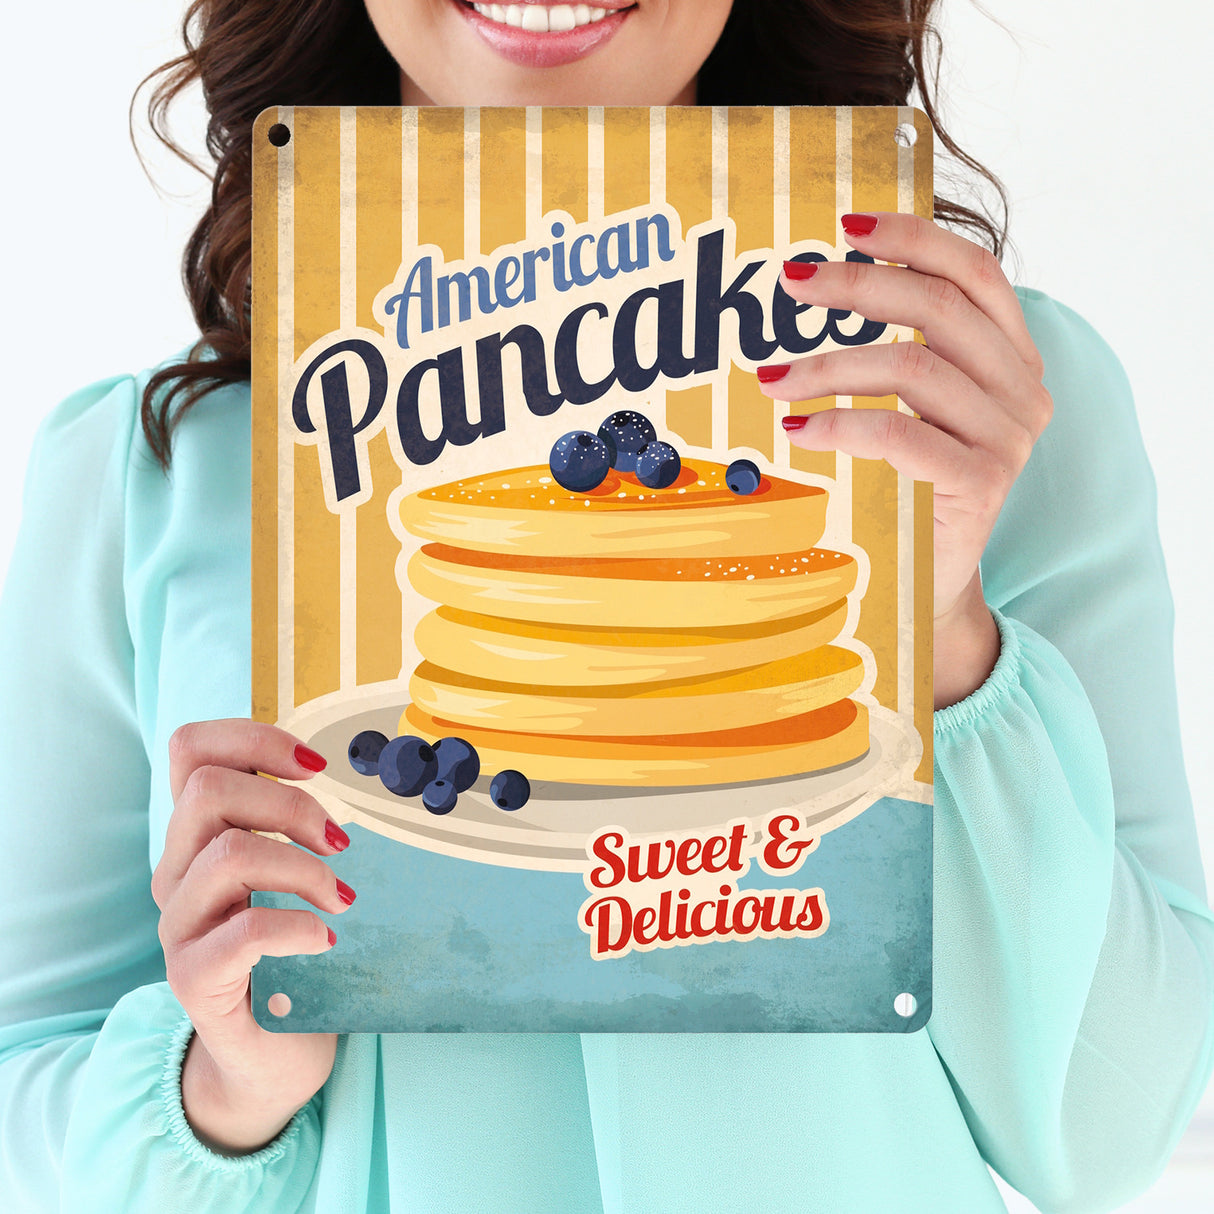 Metallschild mit American Diner Classics - Pancakes Motiv